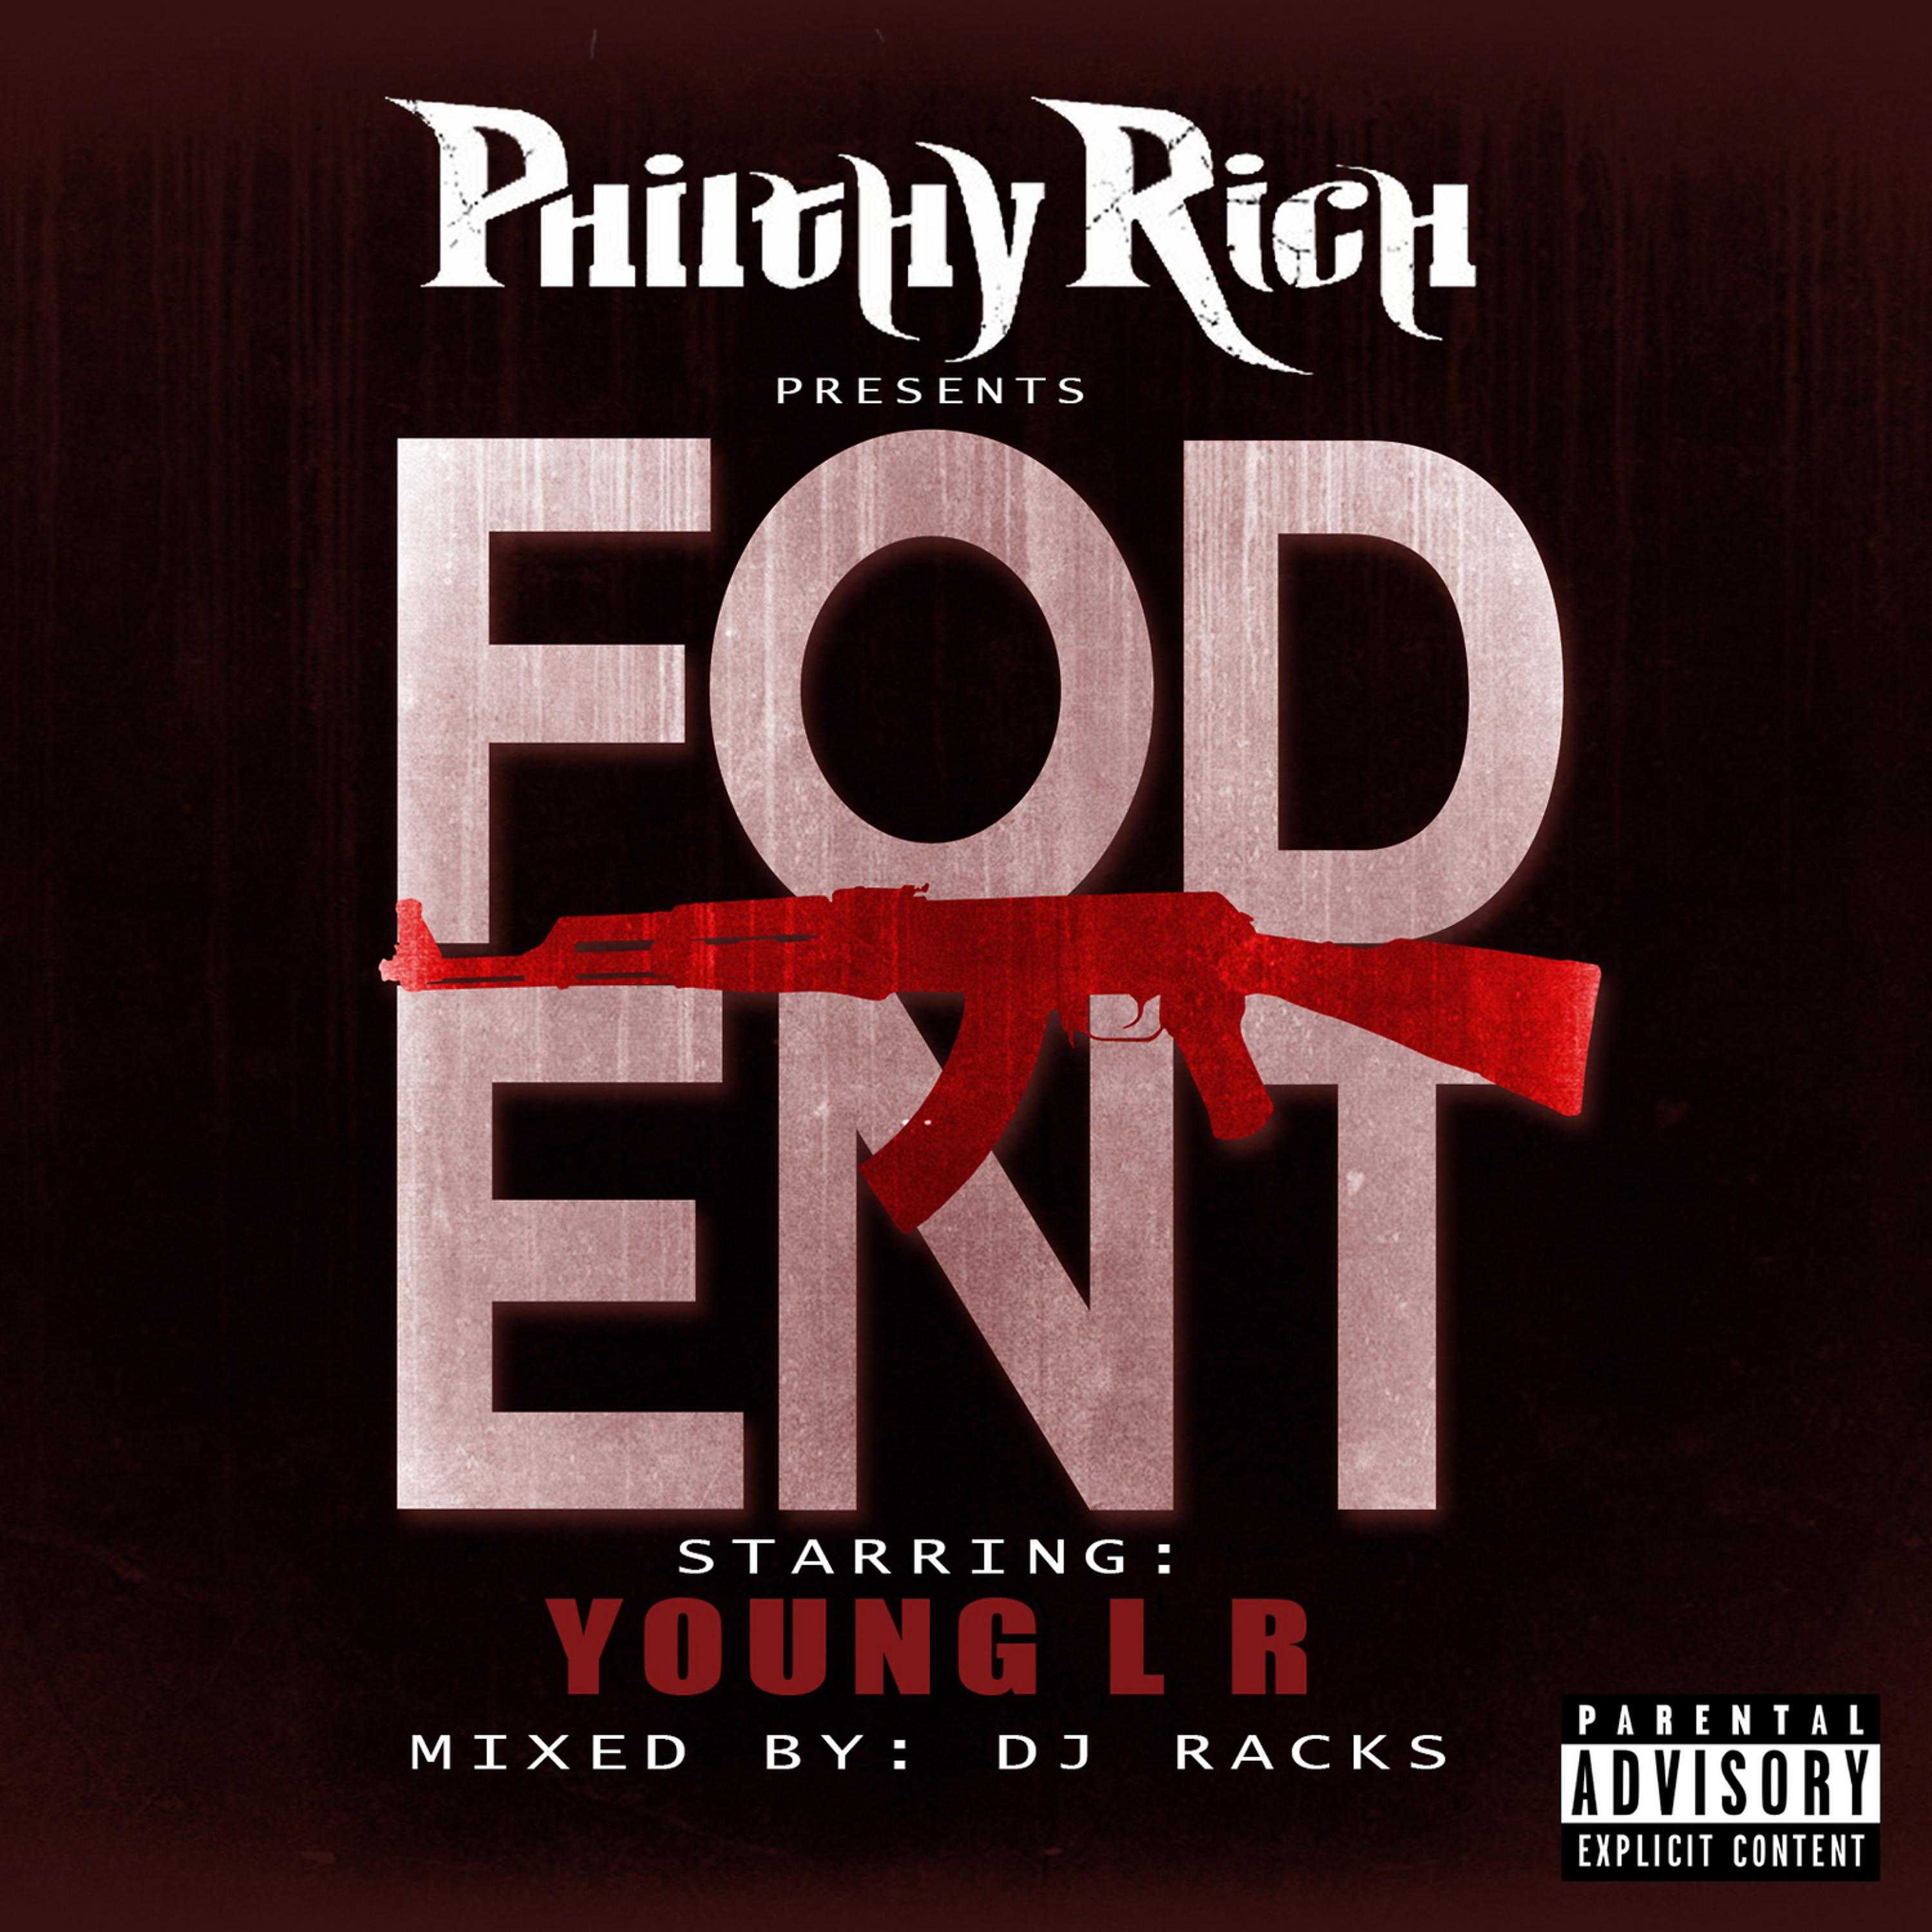 Постер альбома Phithy Rich Presents Fod Ent